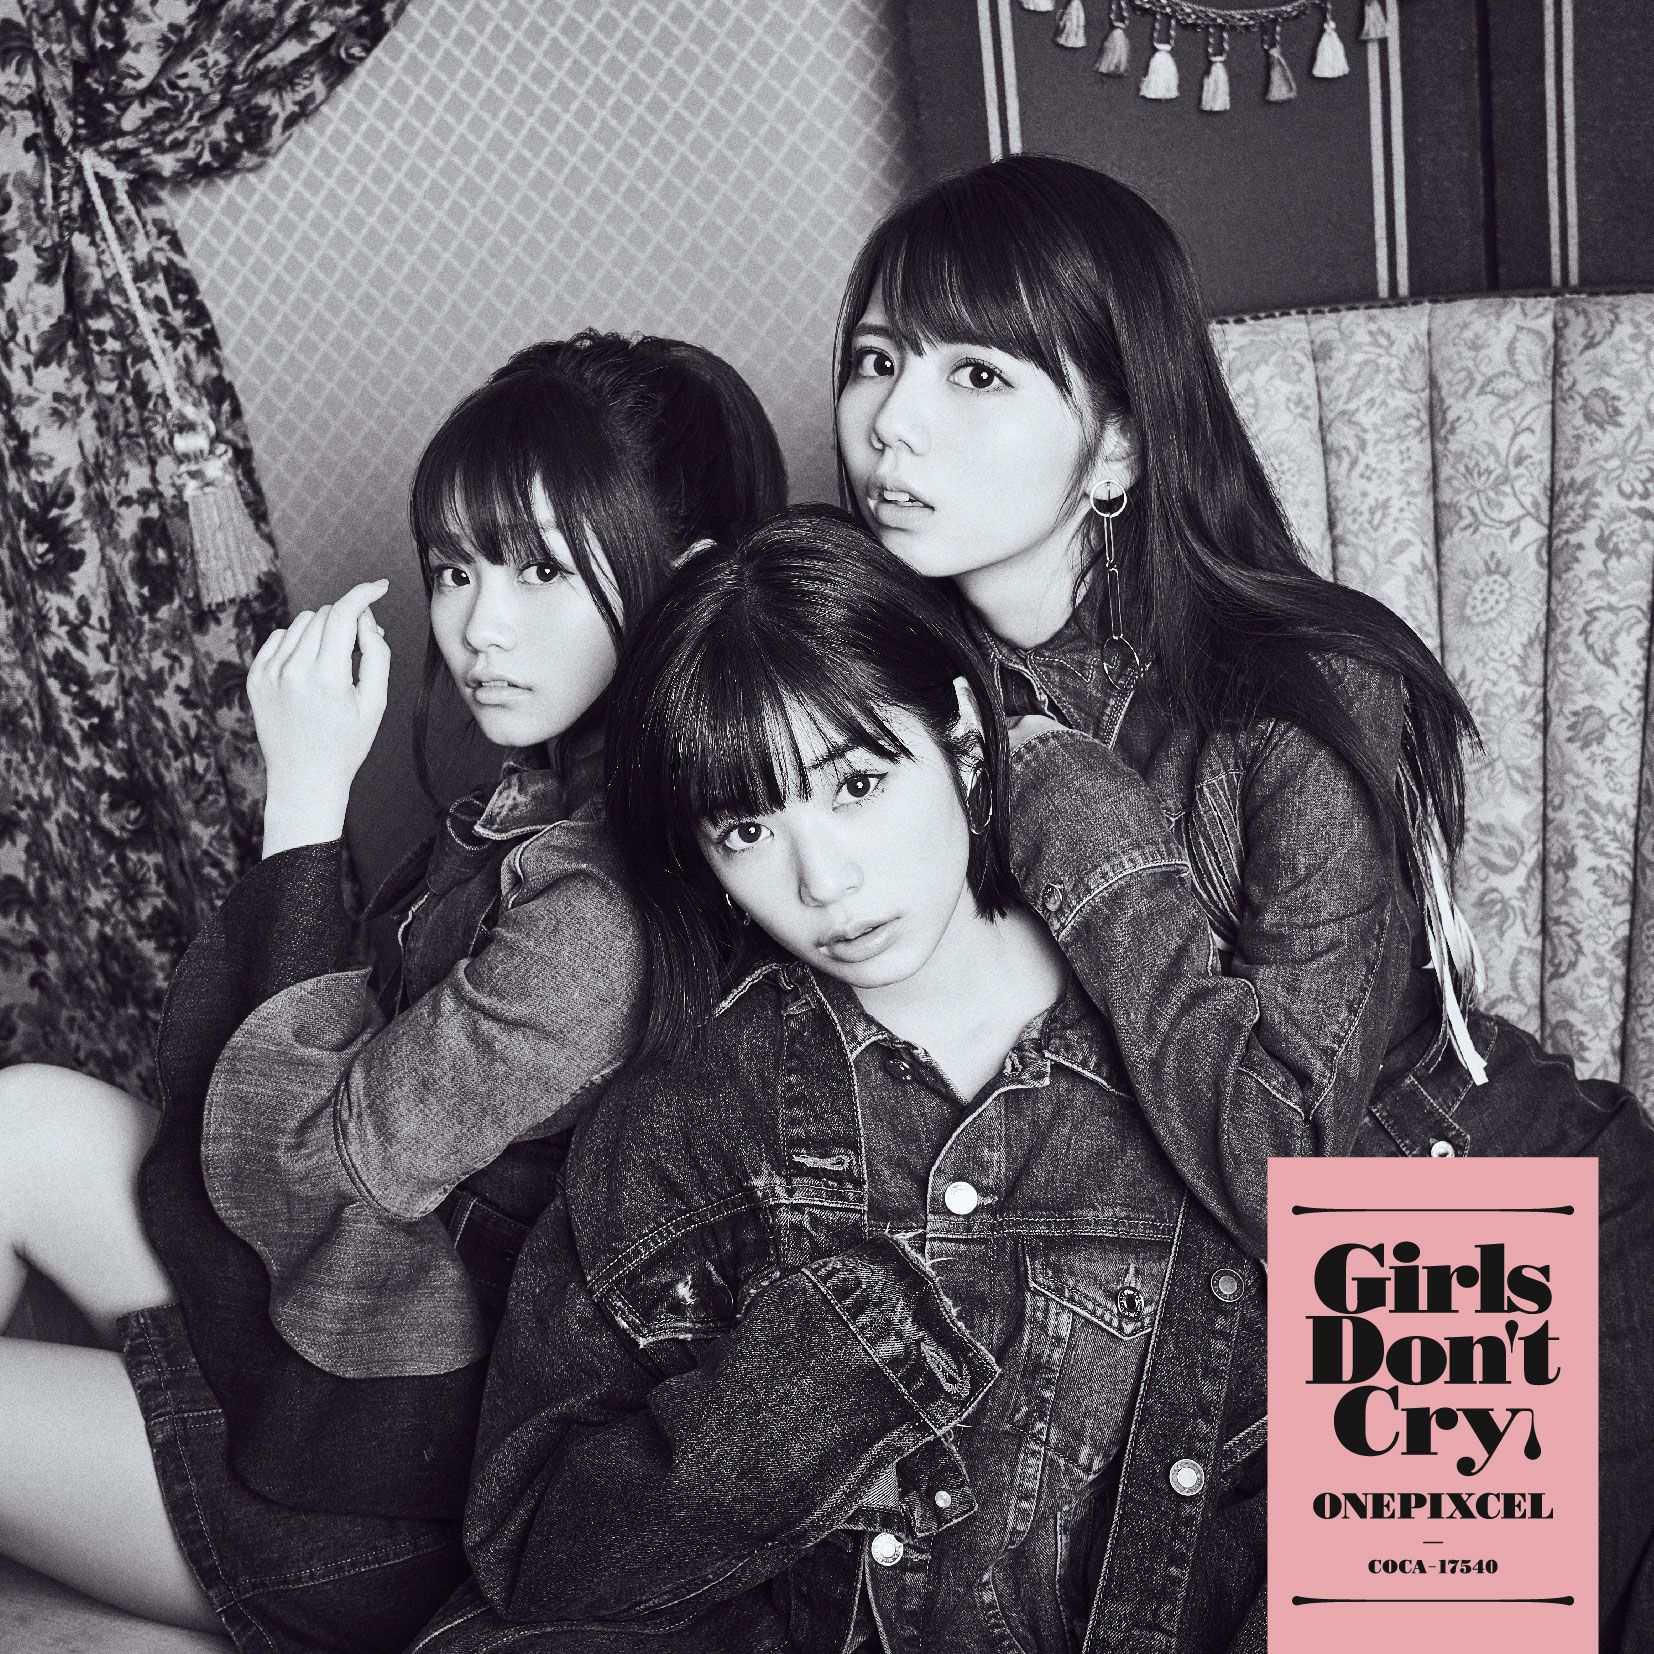 Girls Don't Cry: 商品カテゴリー | ONEPIXCEL | CD/DVD/Blu-ray/レコード/グッズの通販サイト